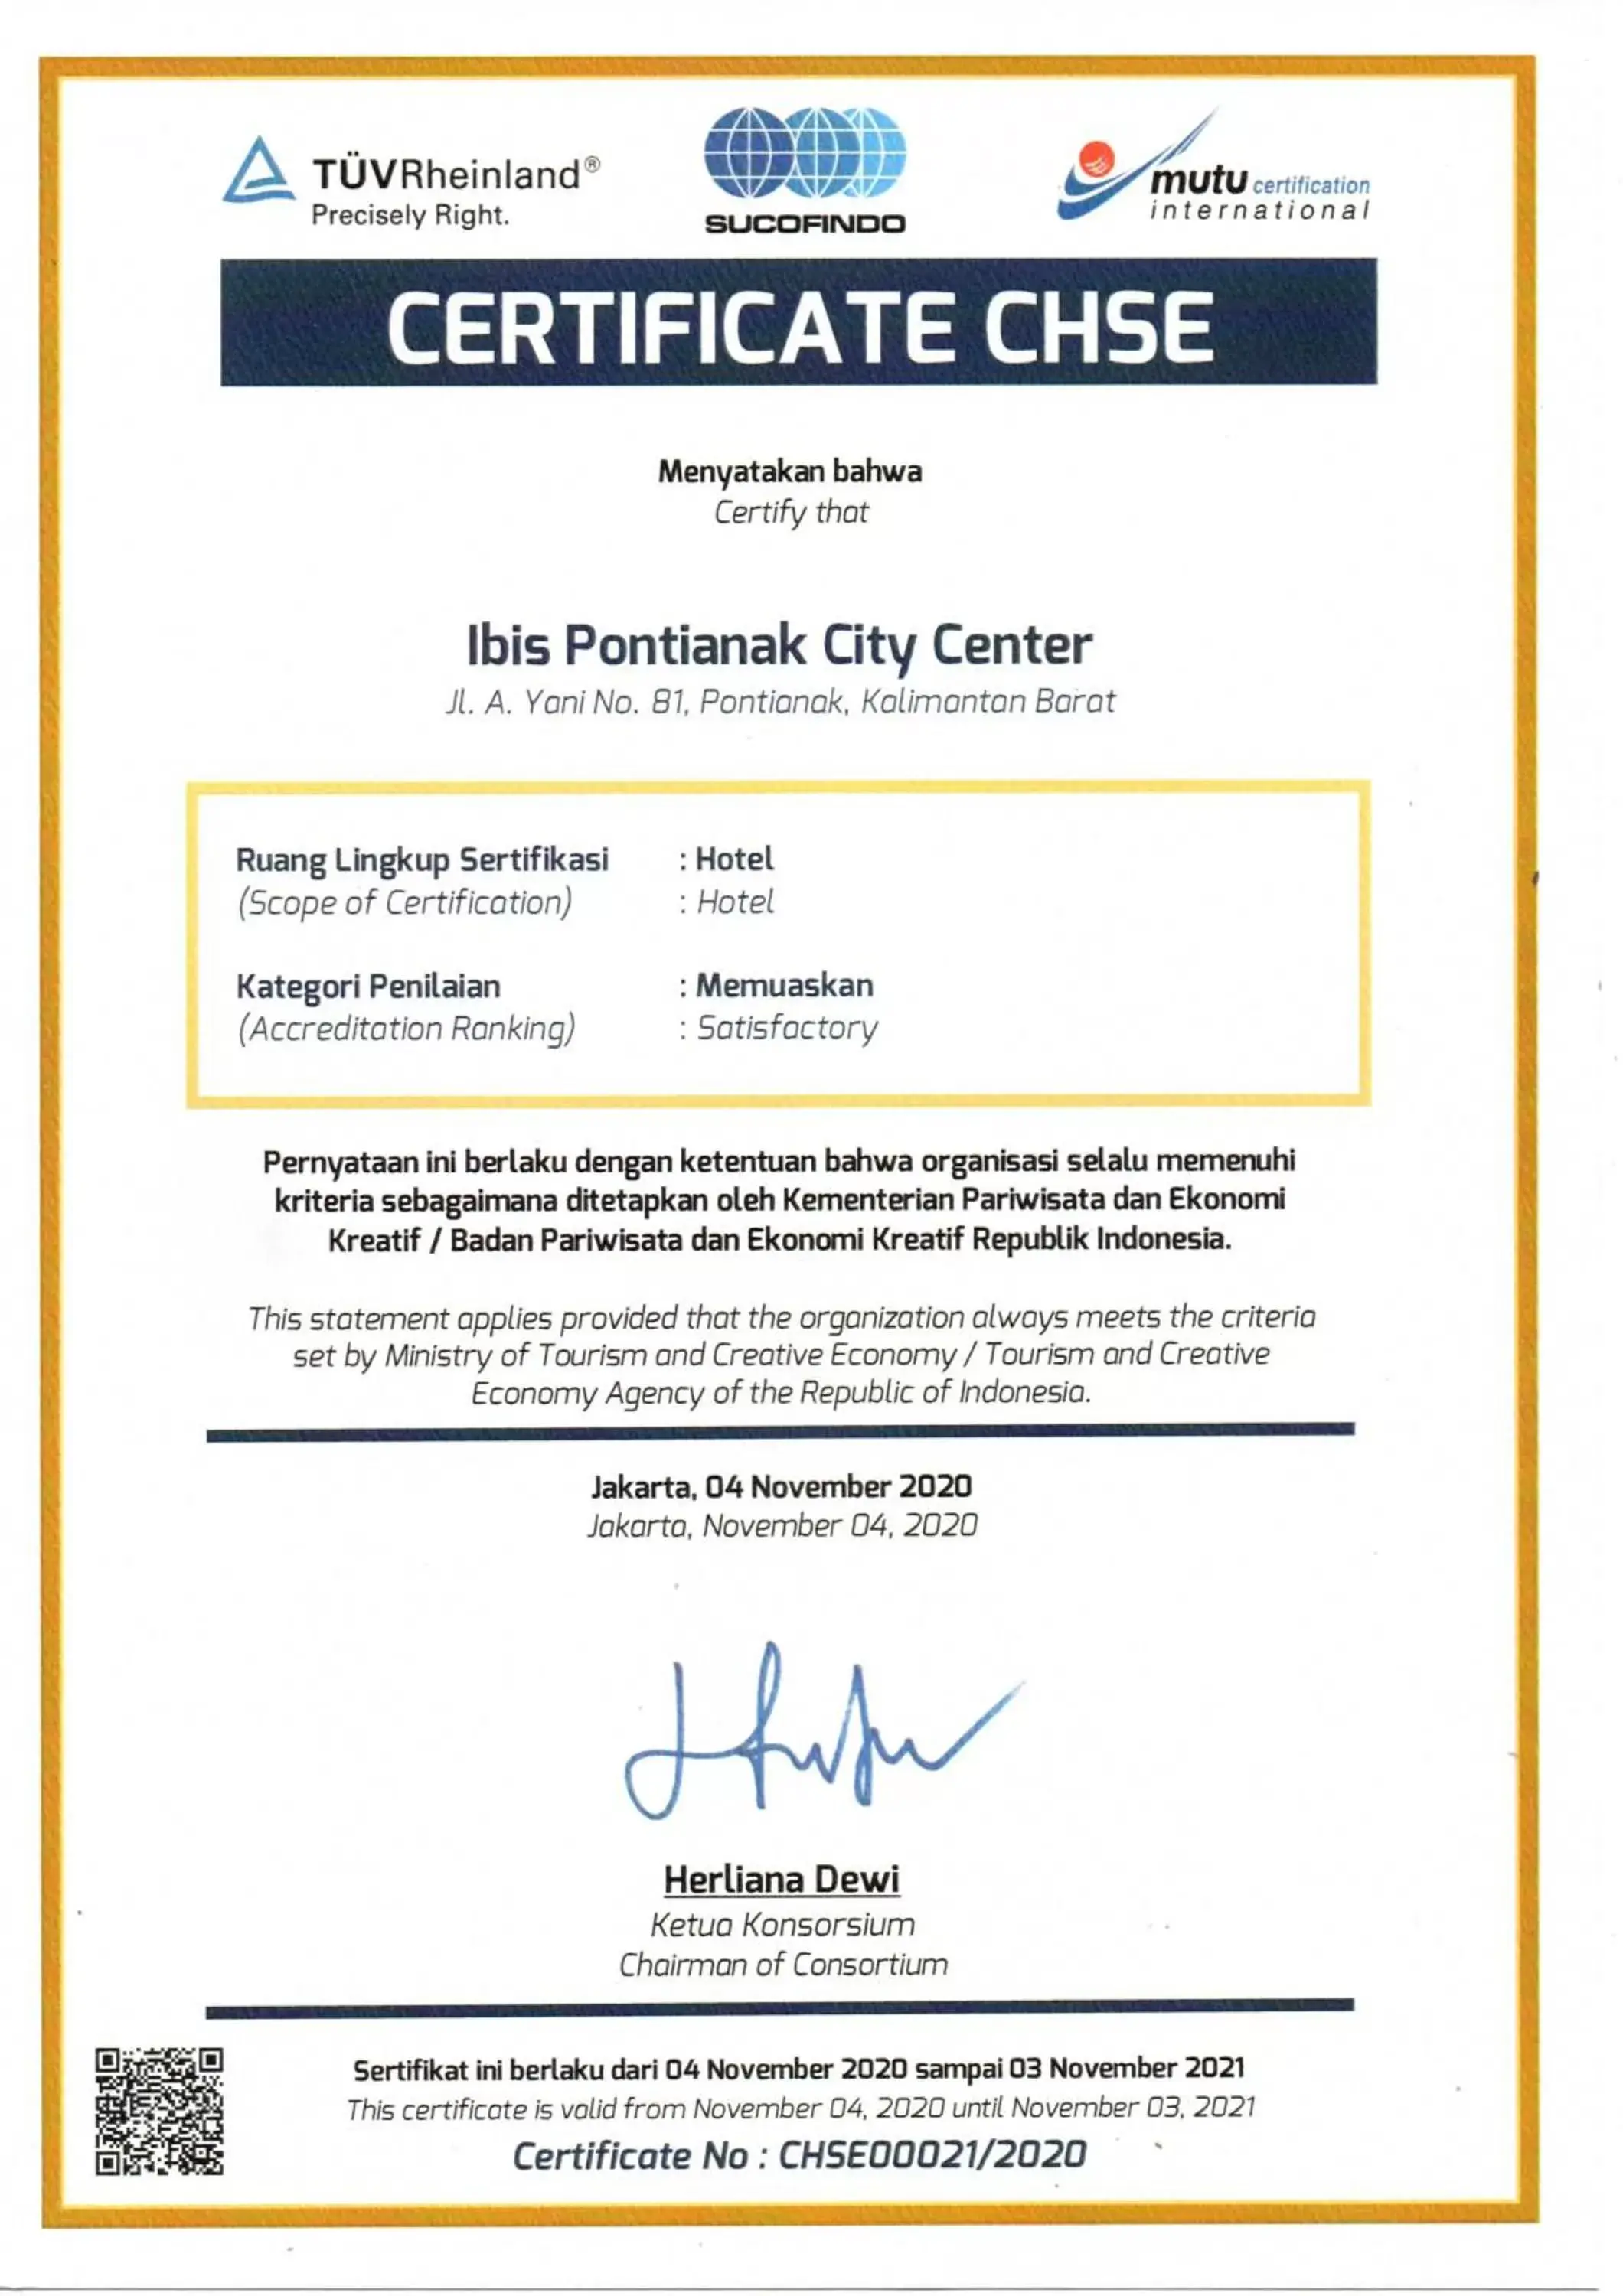 Certificate/Award in ibis Pontianak City Center